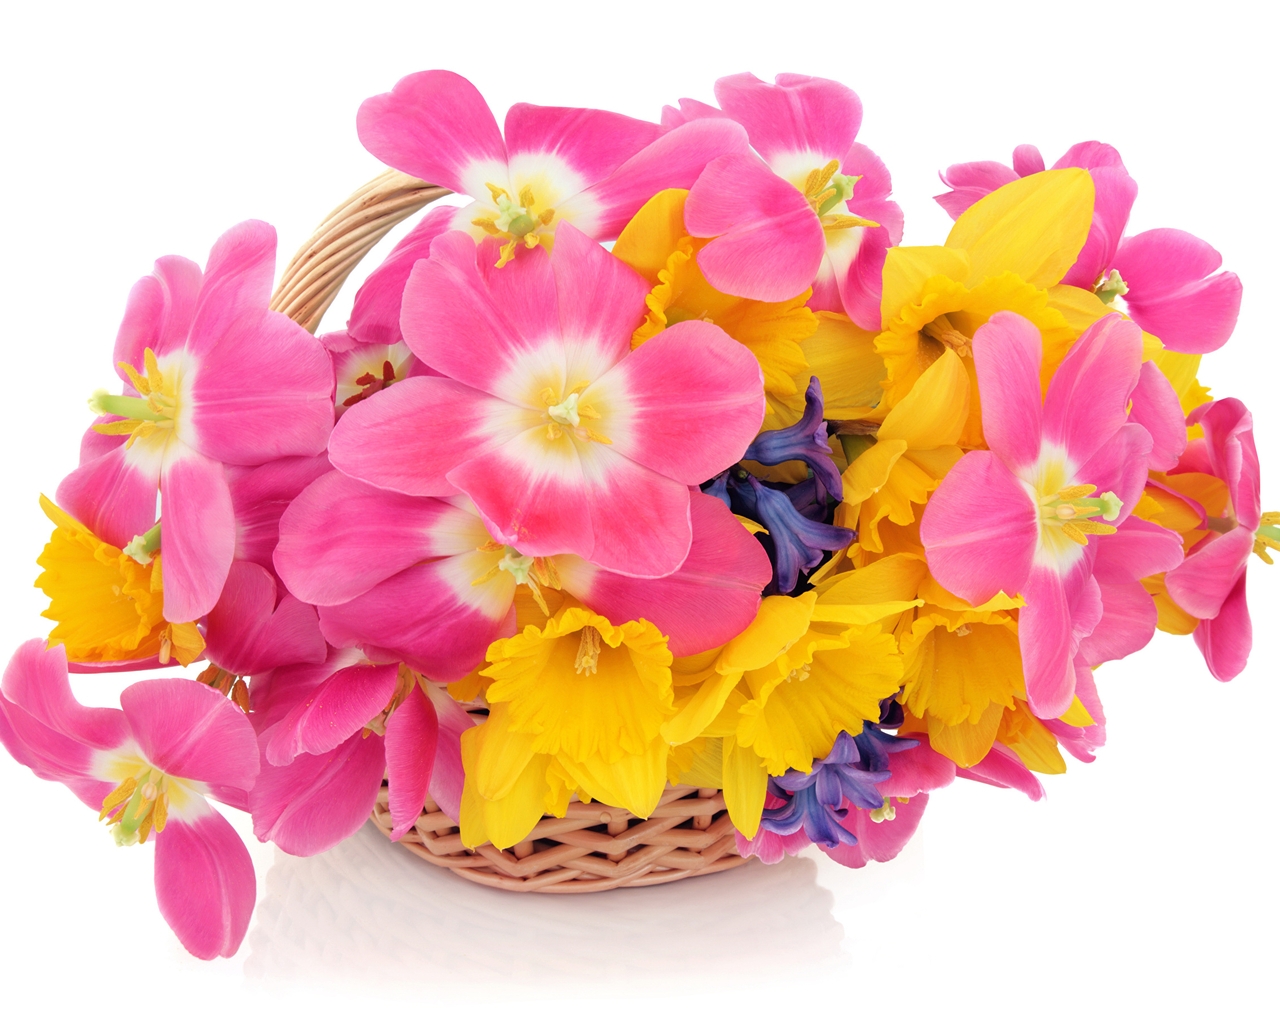 Картинка: Цветы, букет, нарциссы, тюльпаны, корзинка, праздник, белый фон, весна